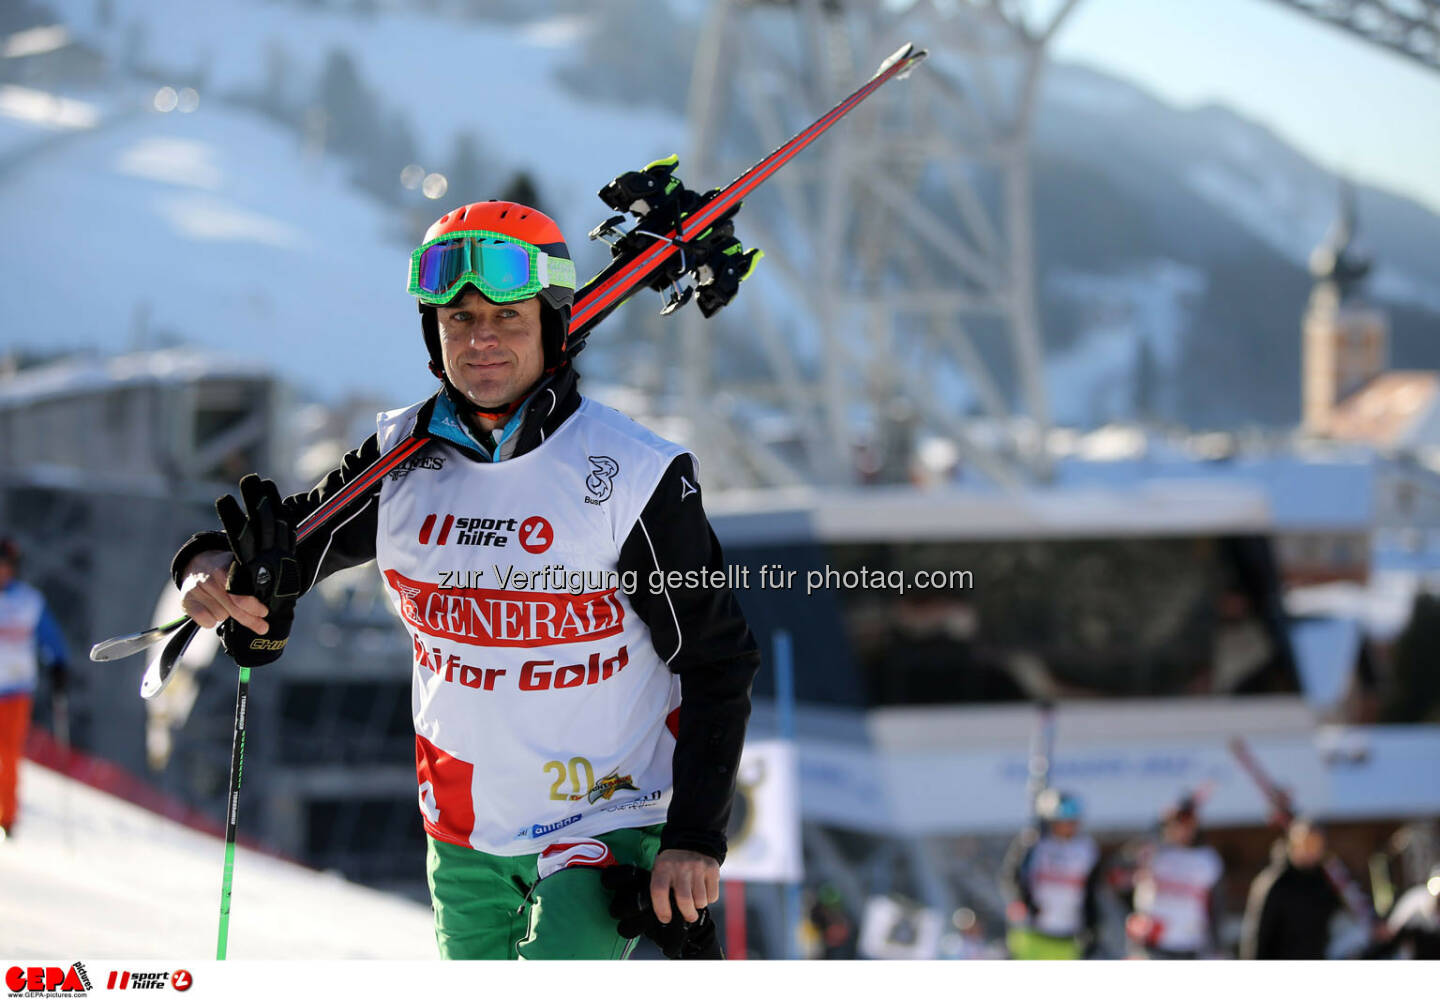 Ski for Gold Charity Race. Image shows Thomas Reisenberger. Photo: GEPA pictures/ Daniel Goetzhaber